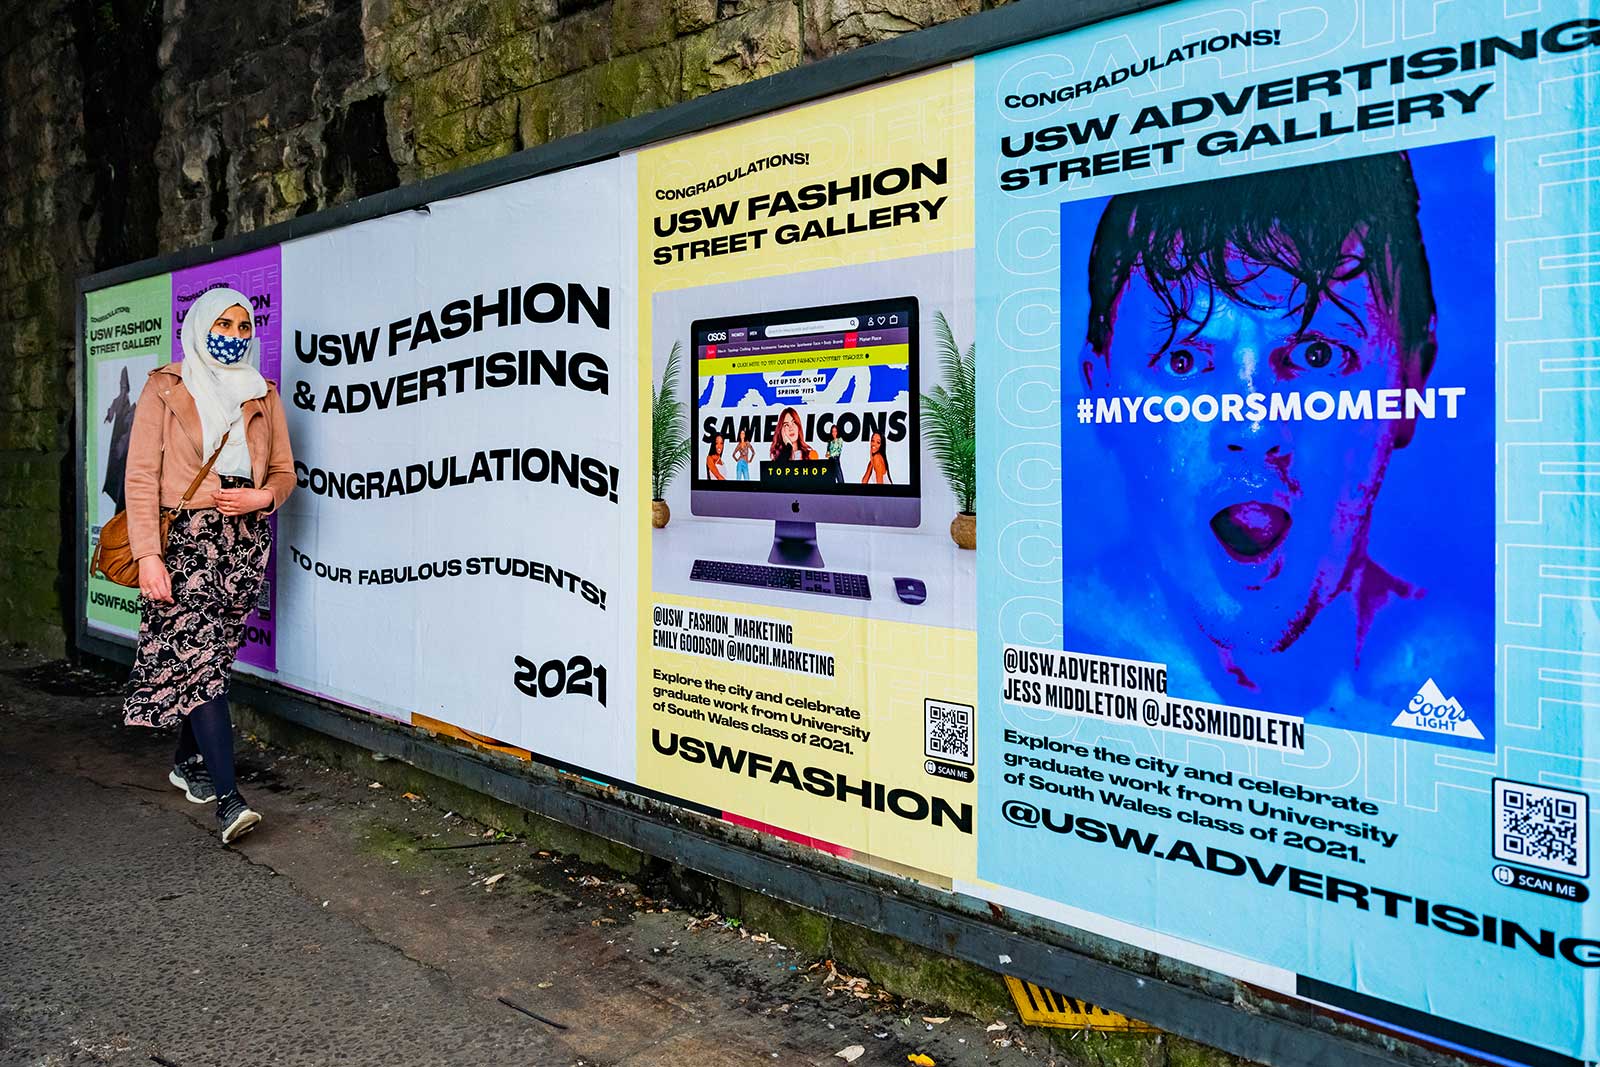 USW Fashion & Advertising: Congradulations